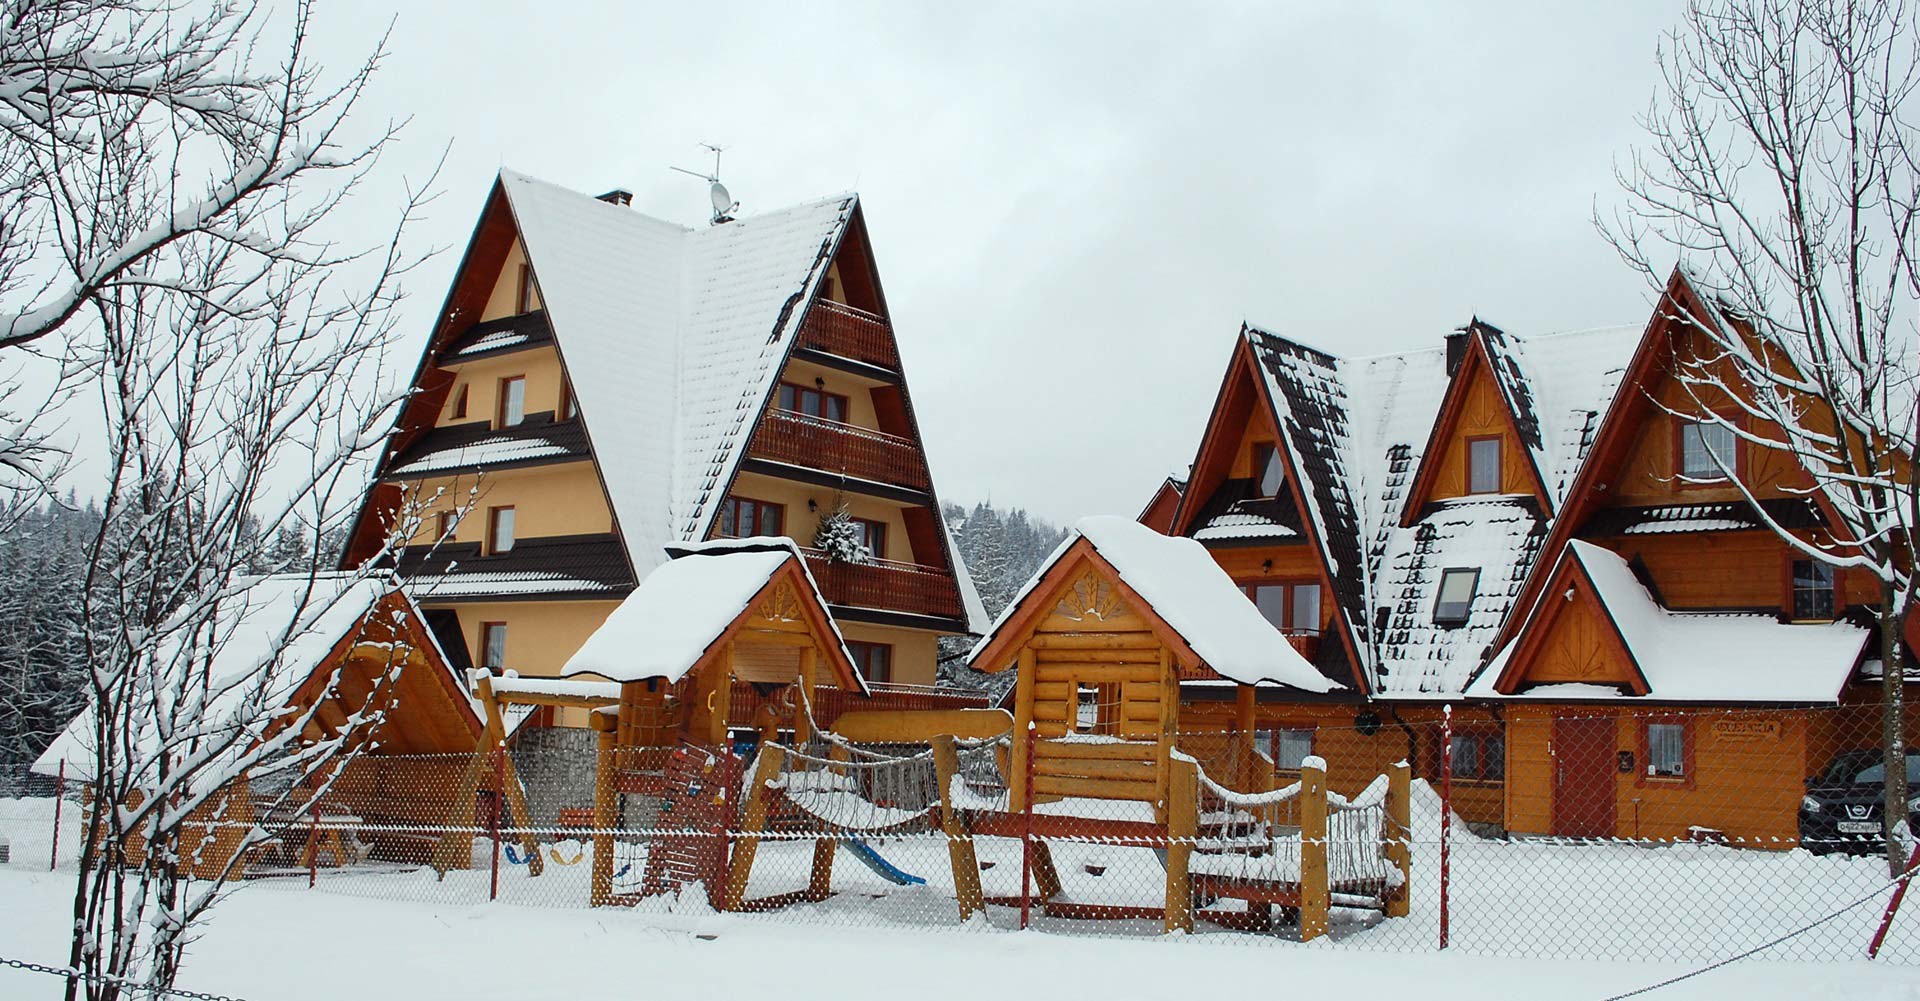 Villa Unterkünfte in Zakopane Räume ins Tatra Gebirge Erholung in Polen